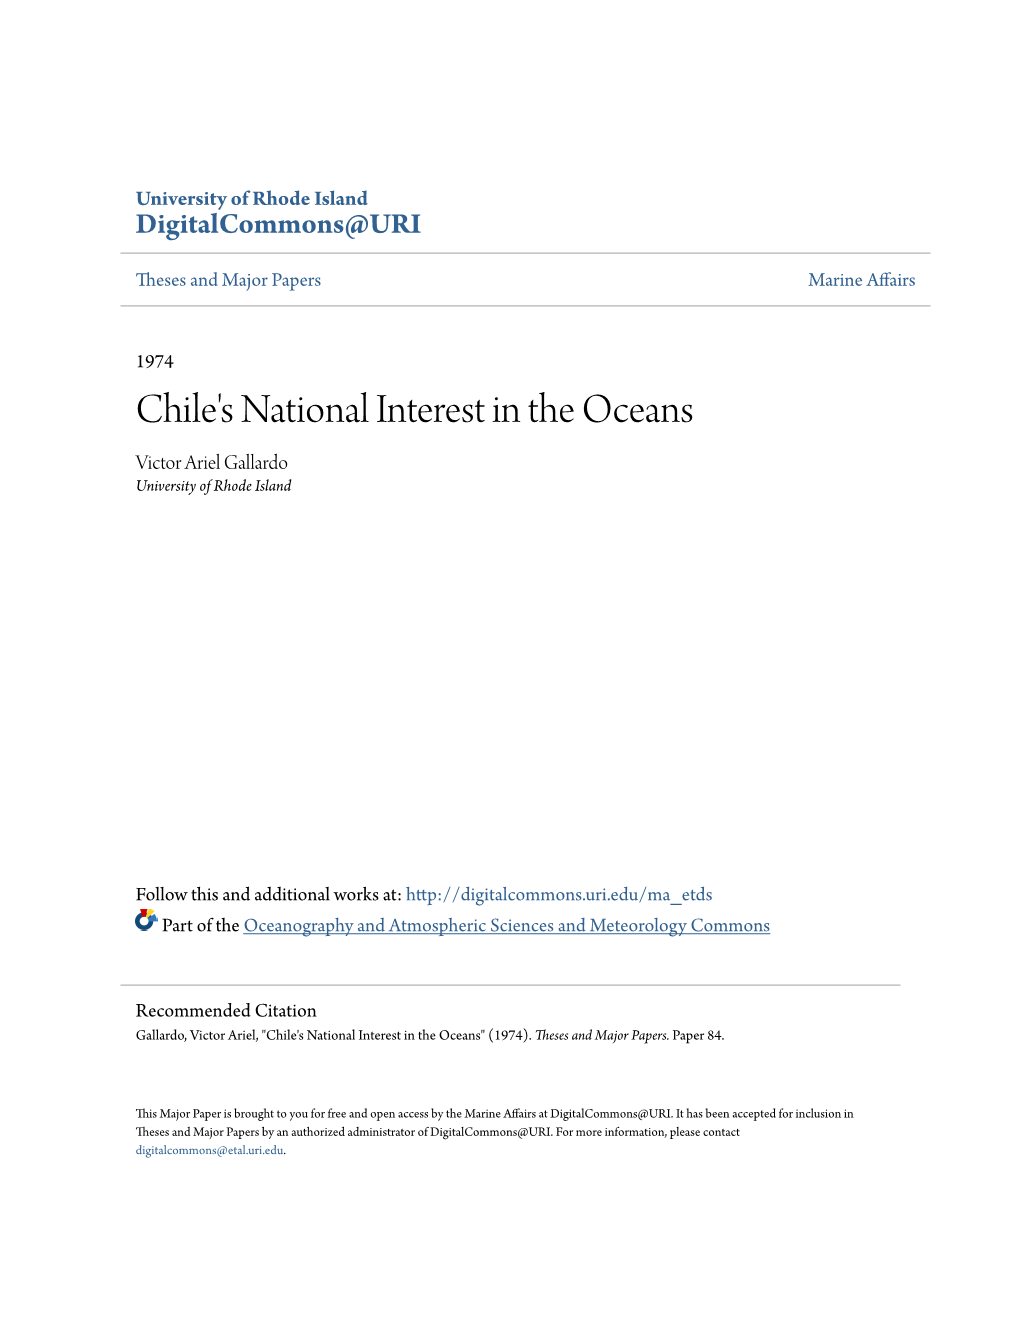 Chile's National Interest in the Oceans Victor Ariel Gallardo University of Rhode Island